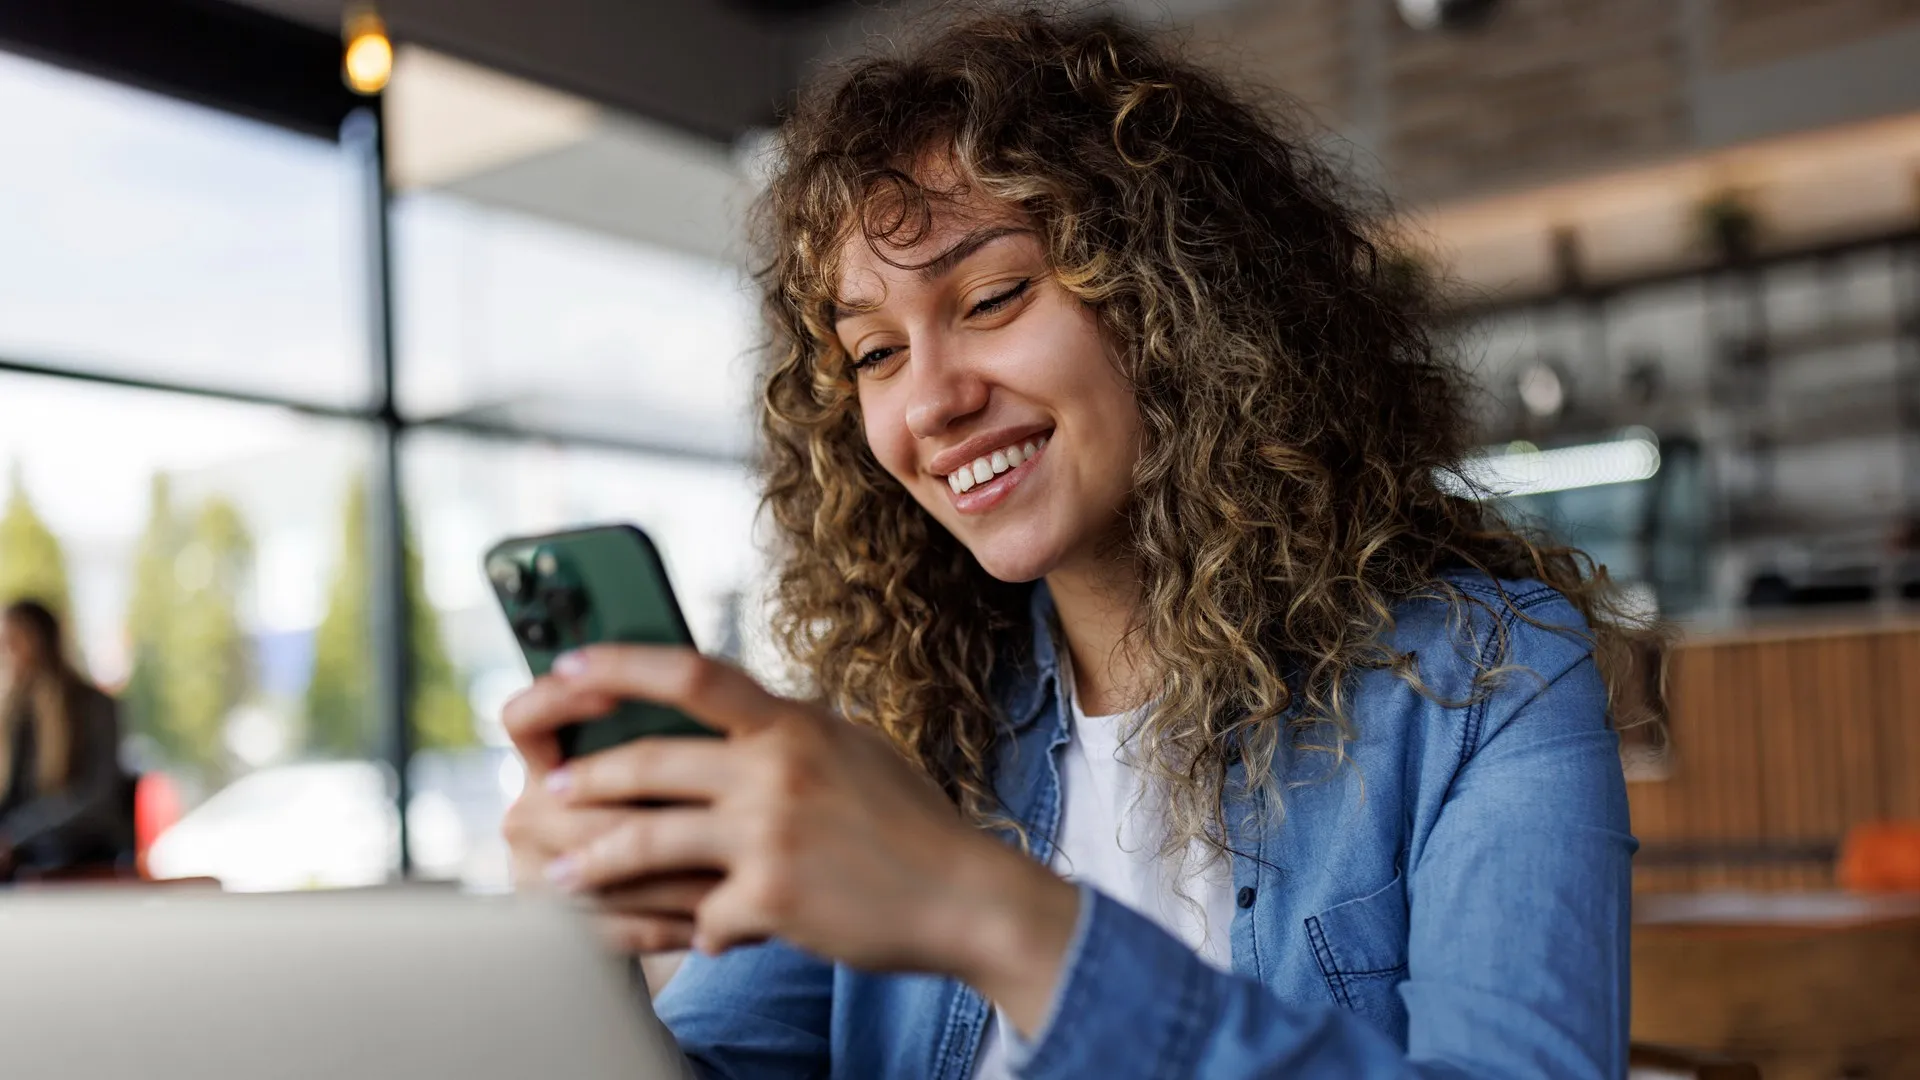 A woman smiles as she checks her phone.